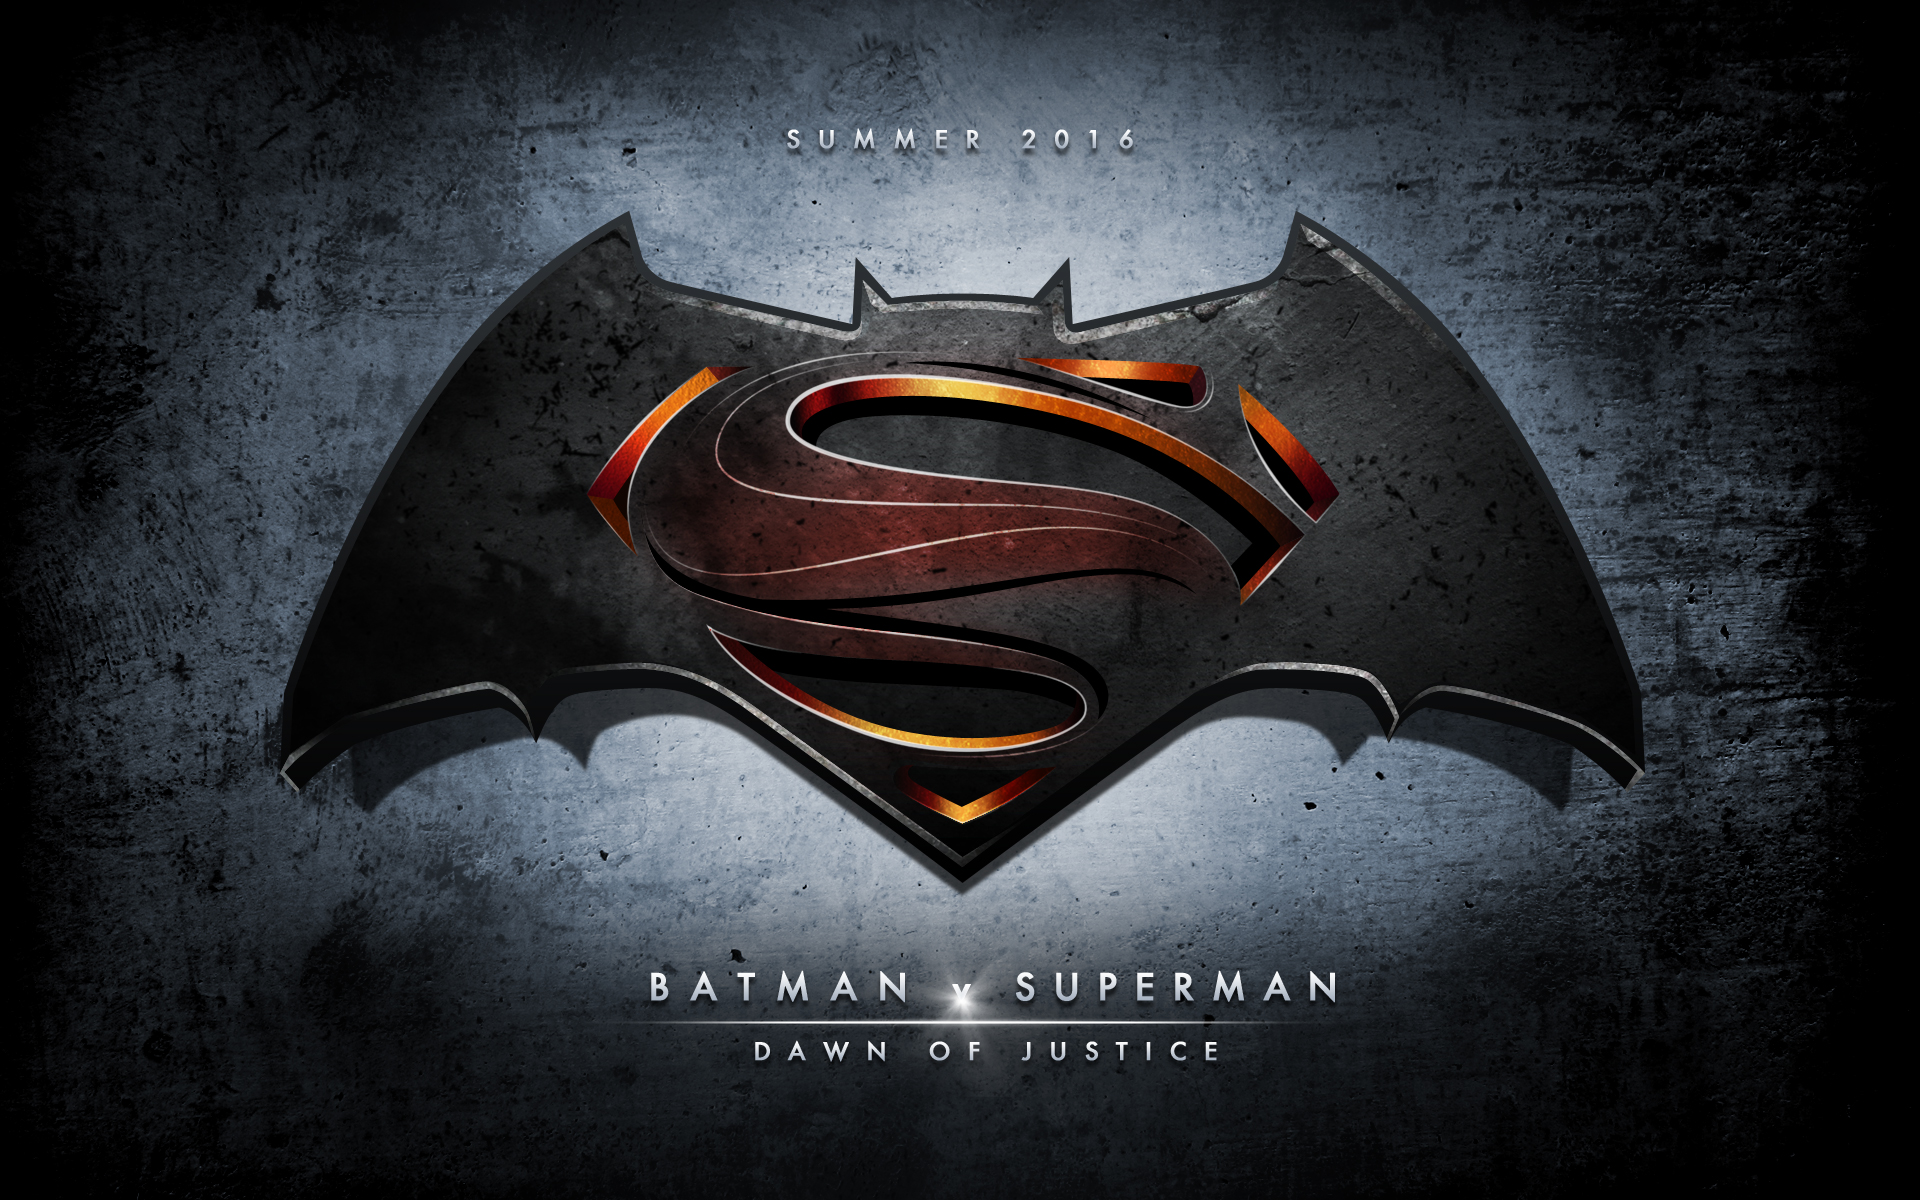 Batman v Superman Dawn of Justice movie poster and logo